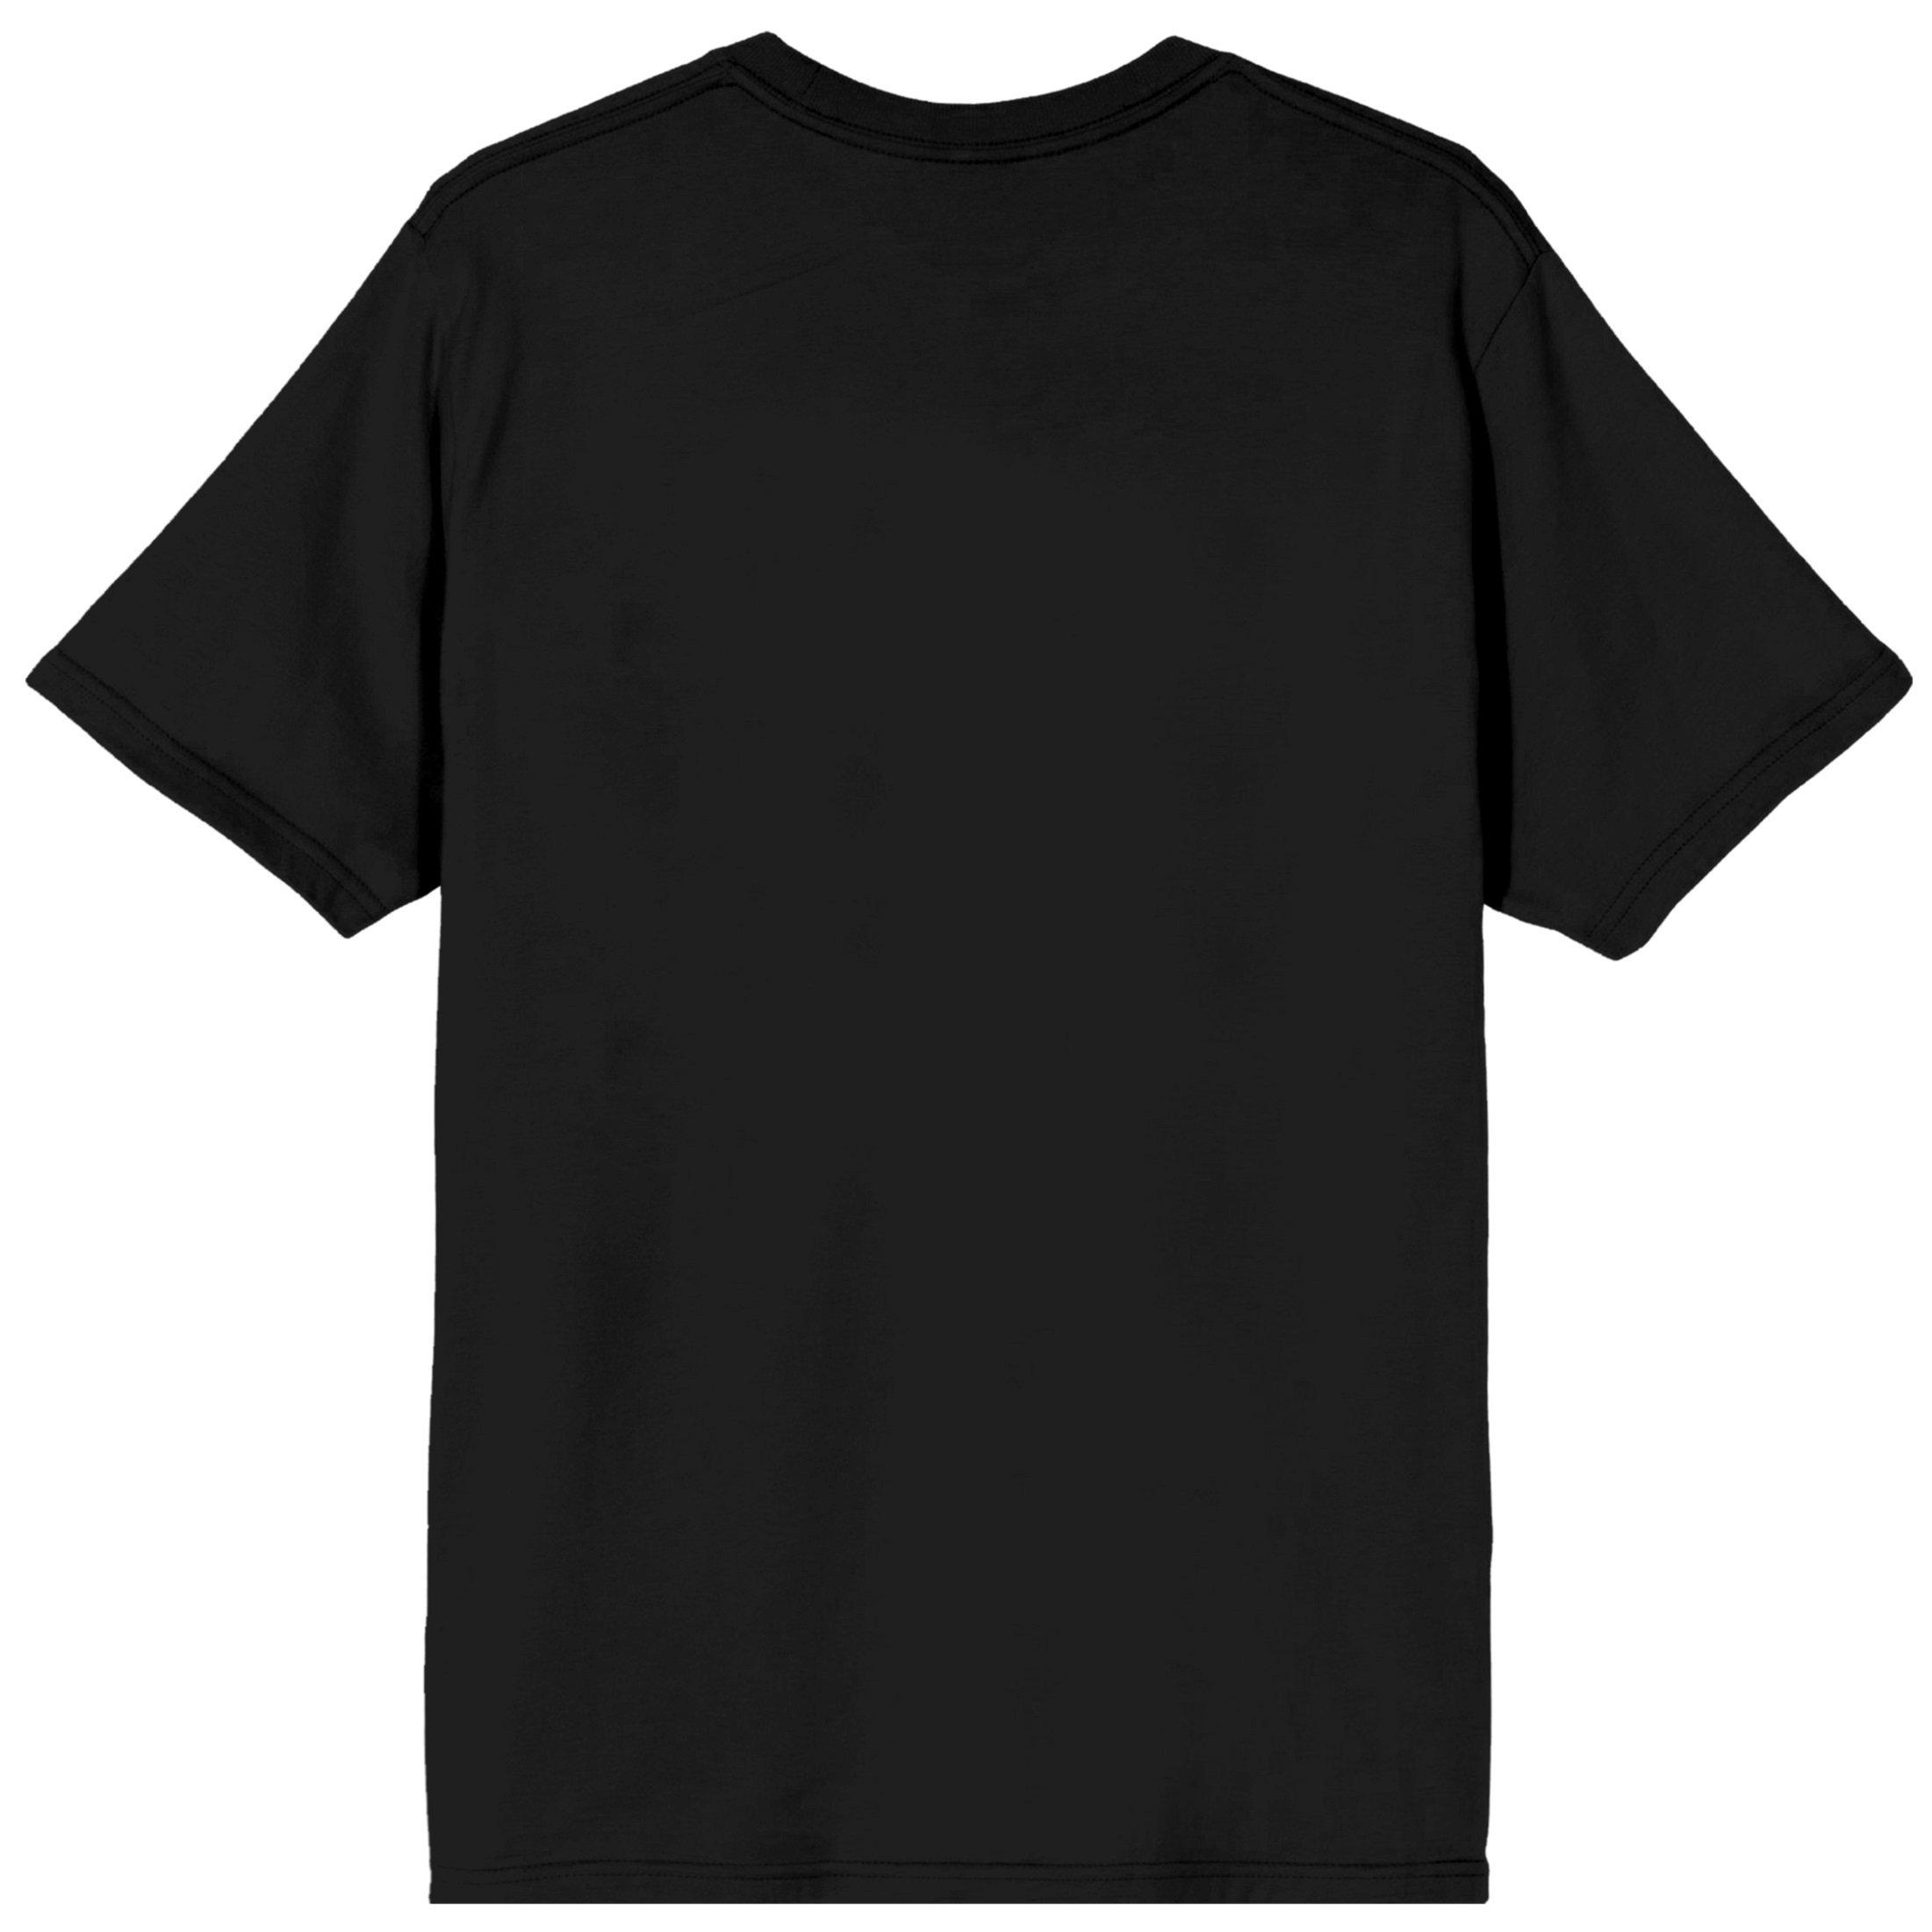 Kirby Sleepy Kirby Crew Neck Short Sleeve Men's Black T-Shirt